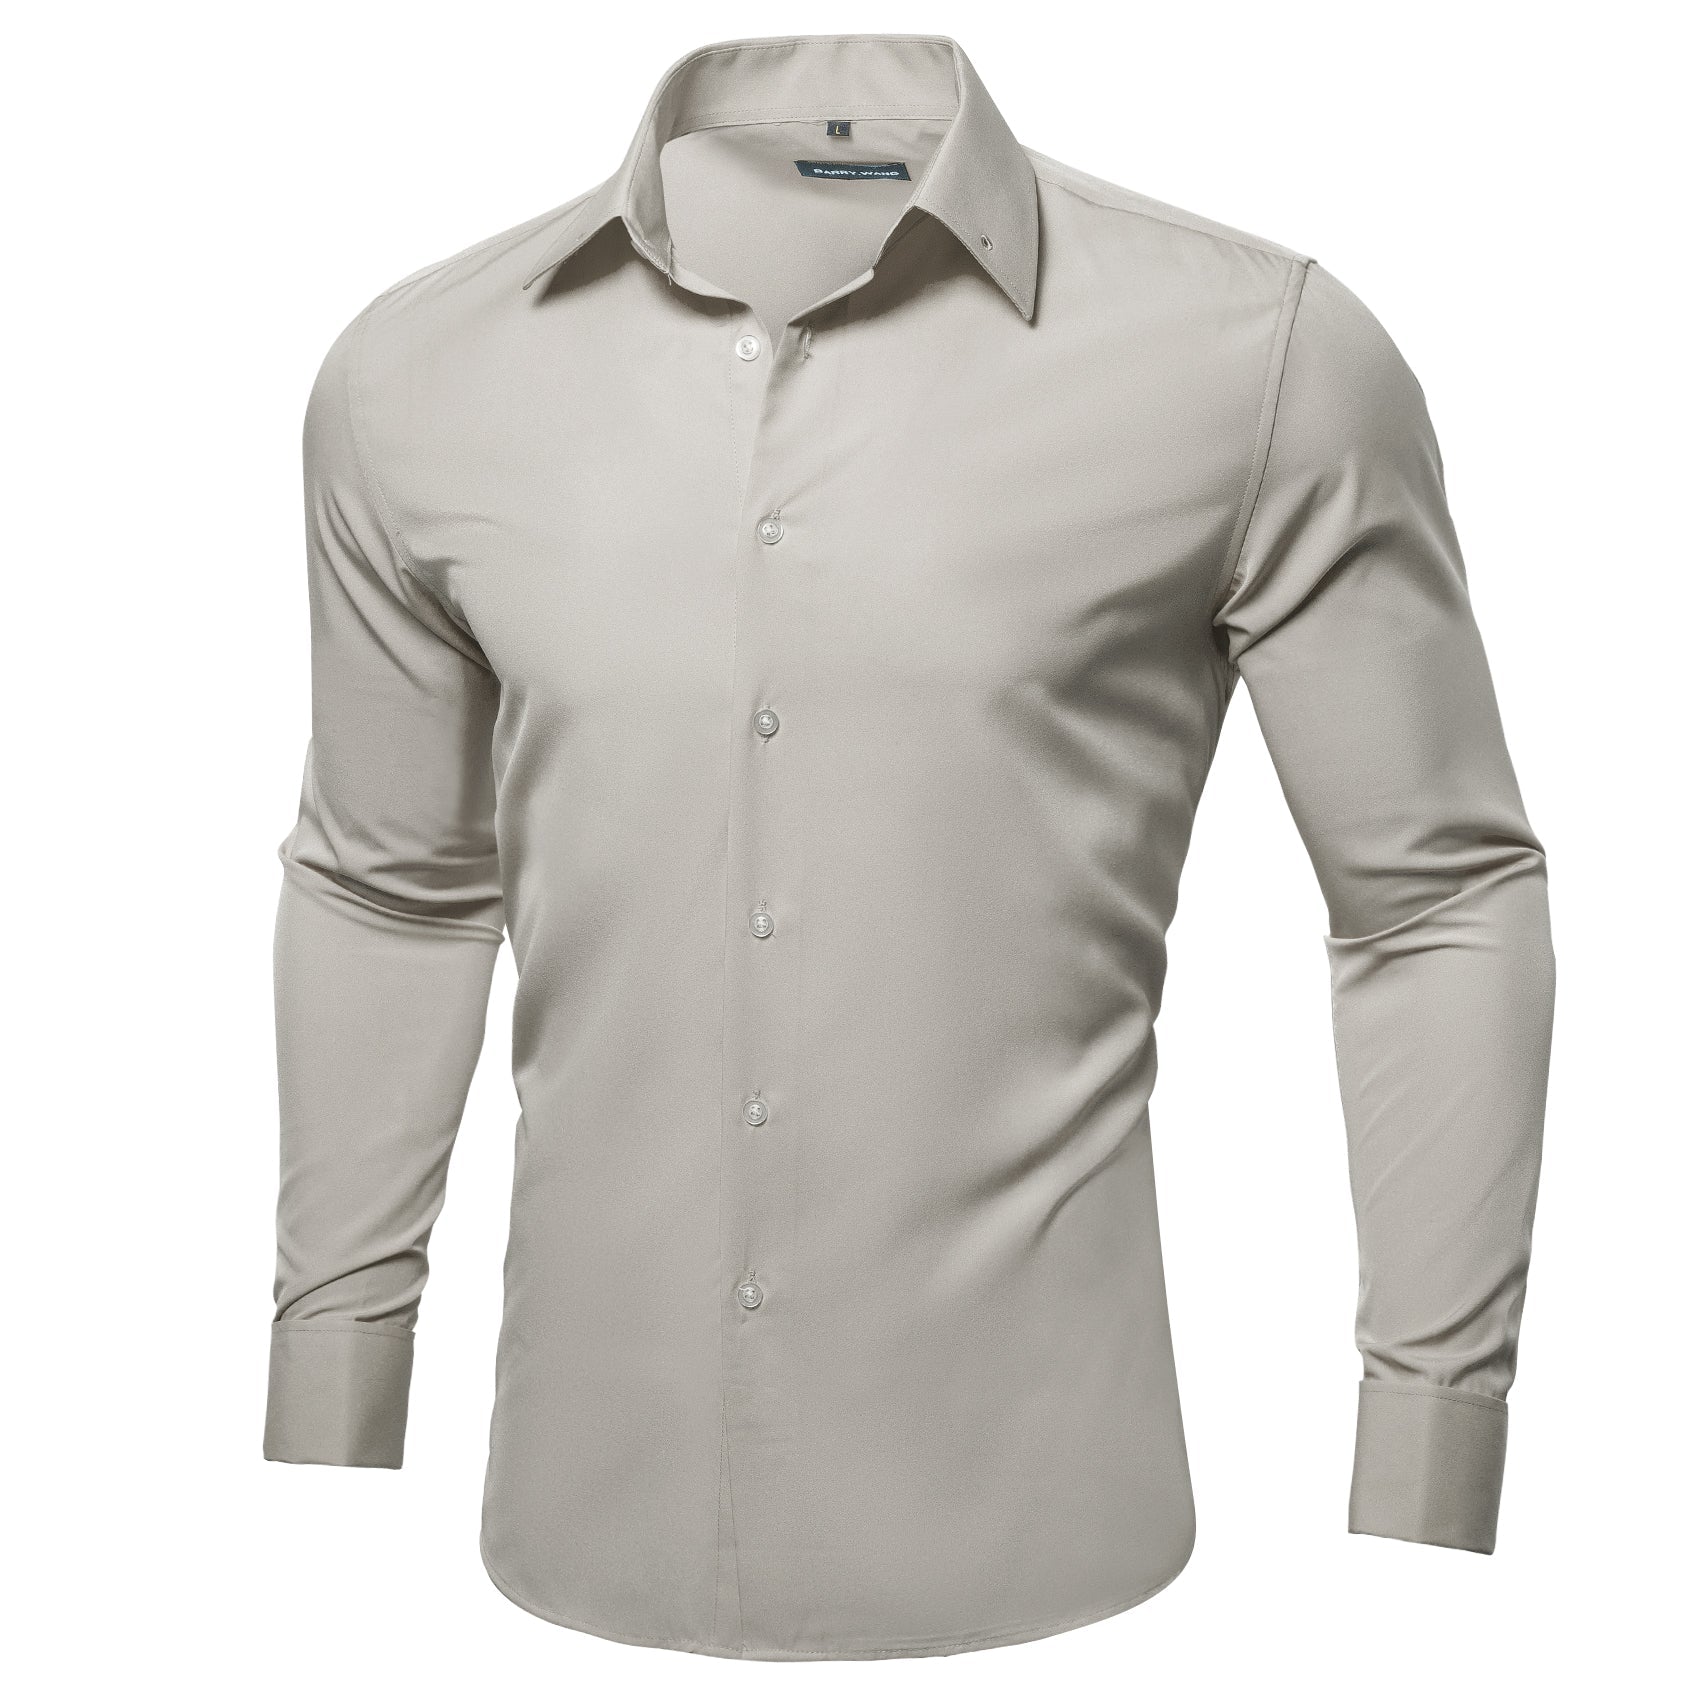 Barry.wang Light Grey Solid Silk Shirt with Collar Pin